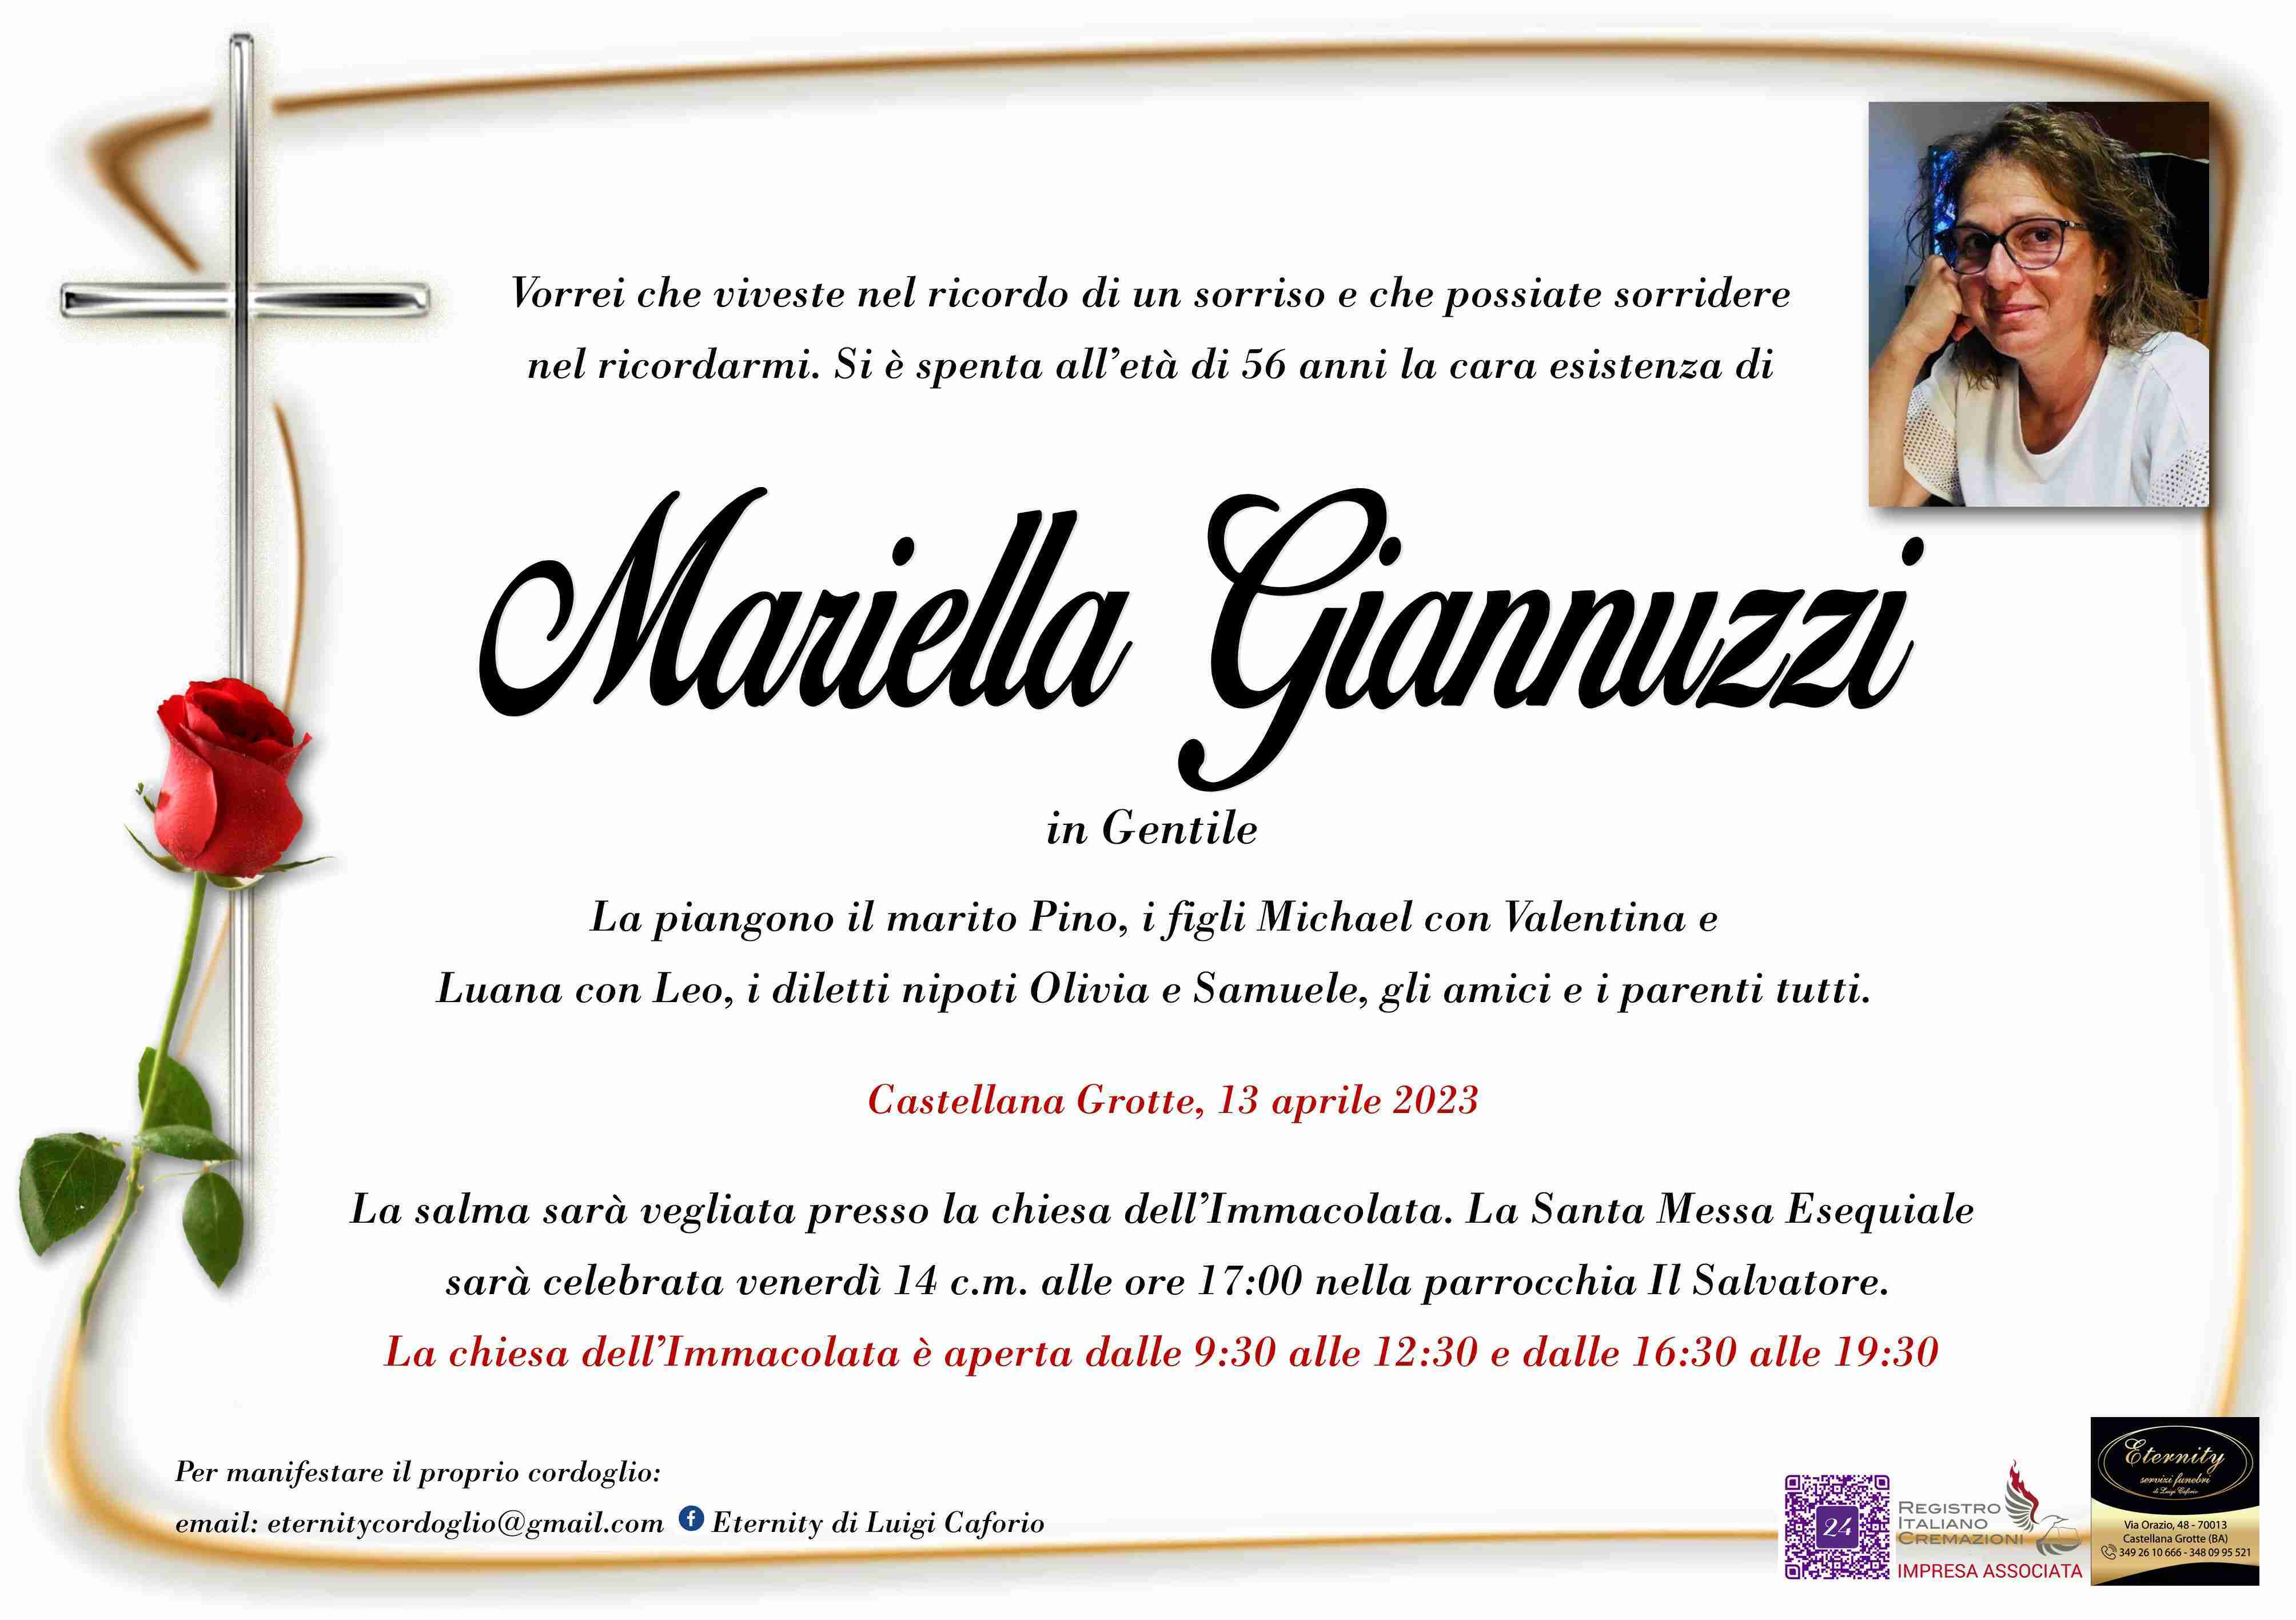 Mariella Giannuzzi